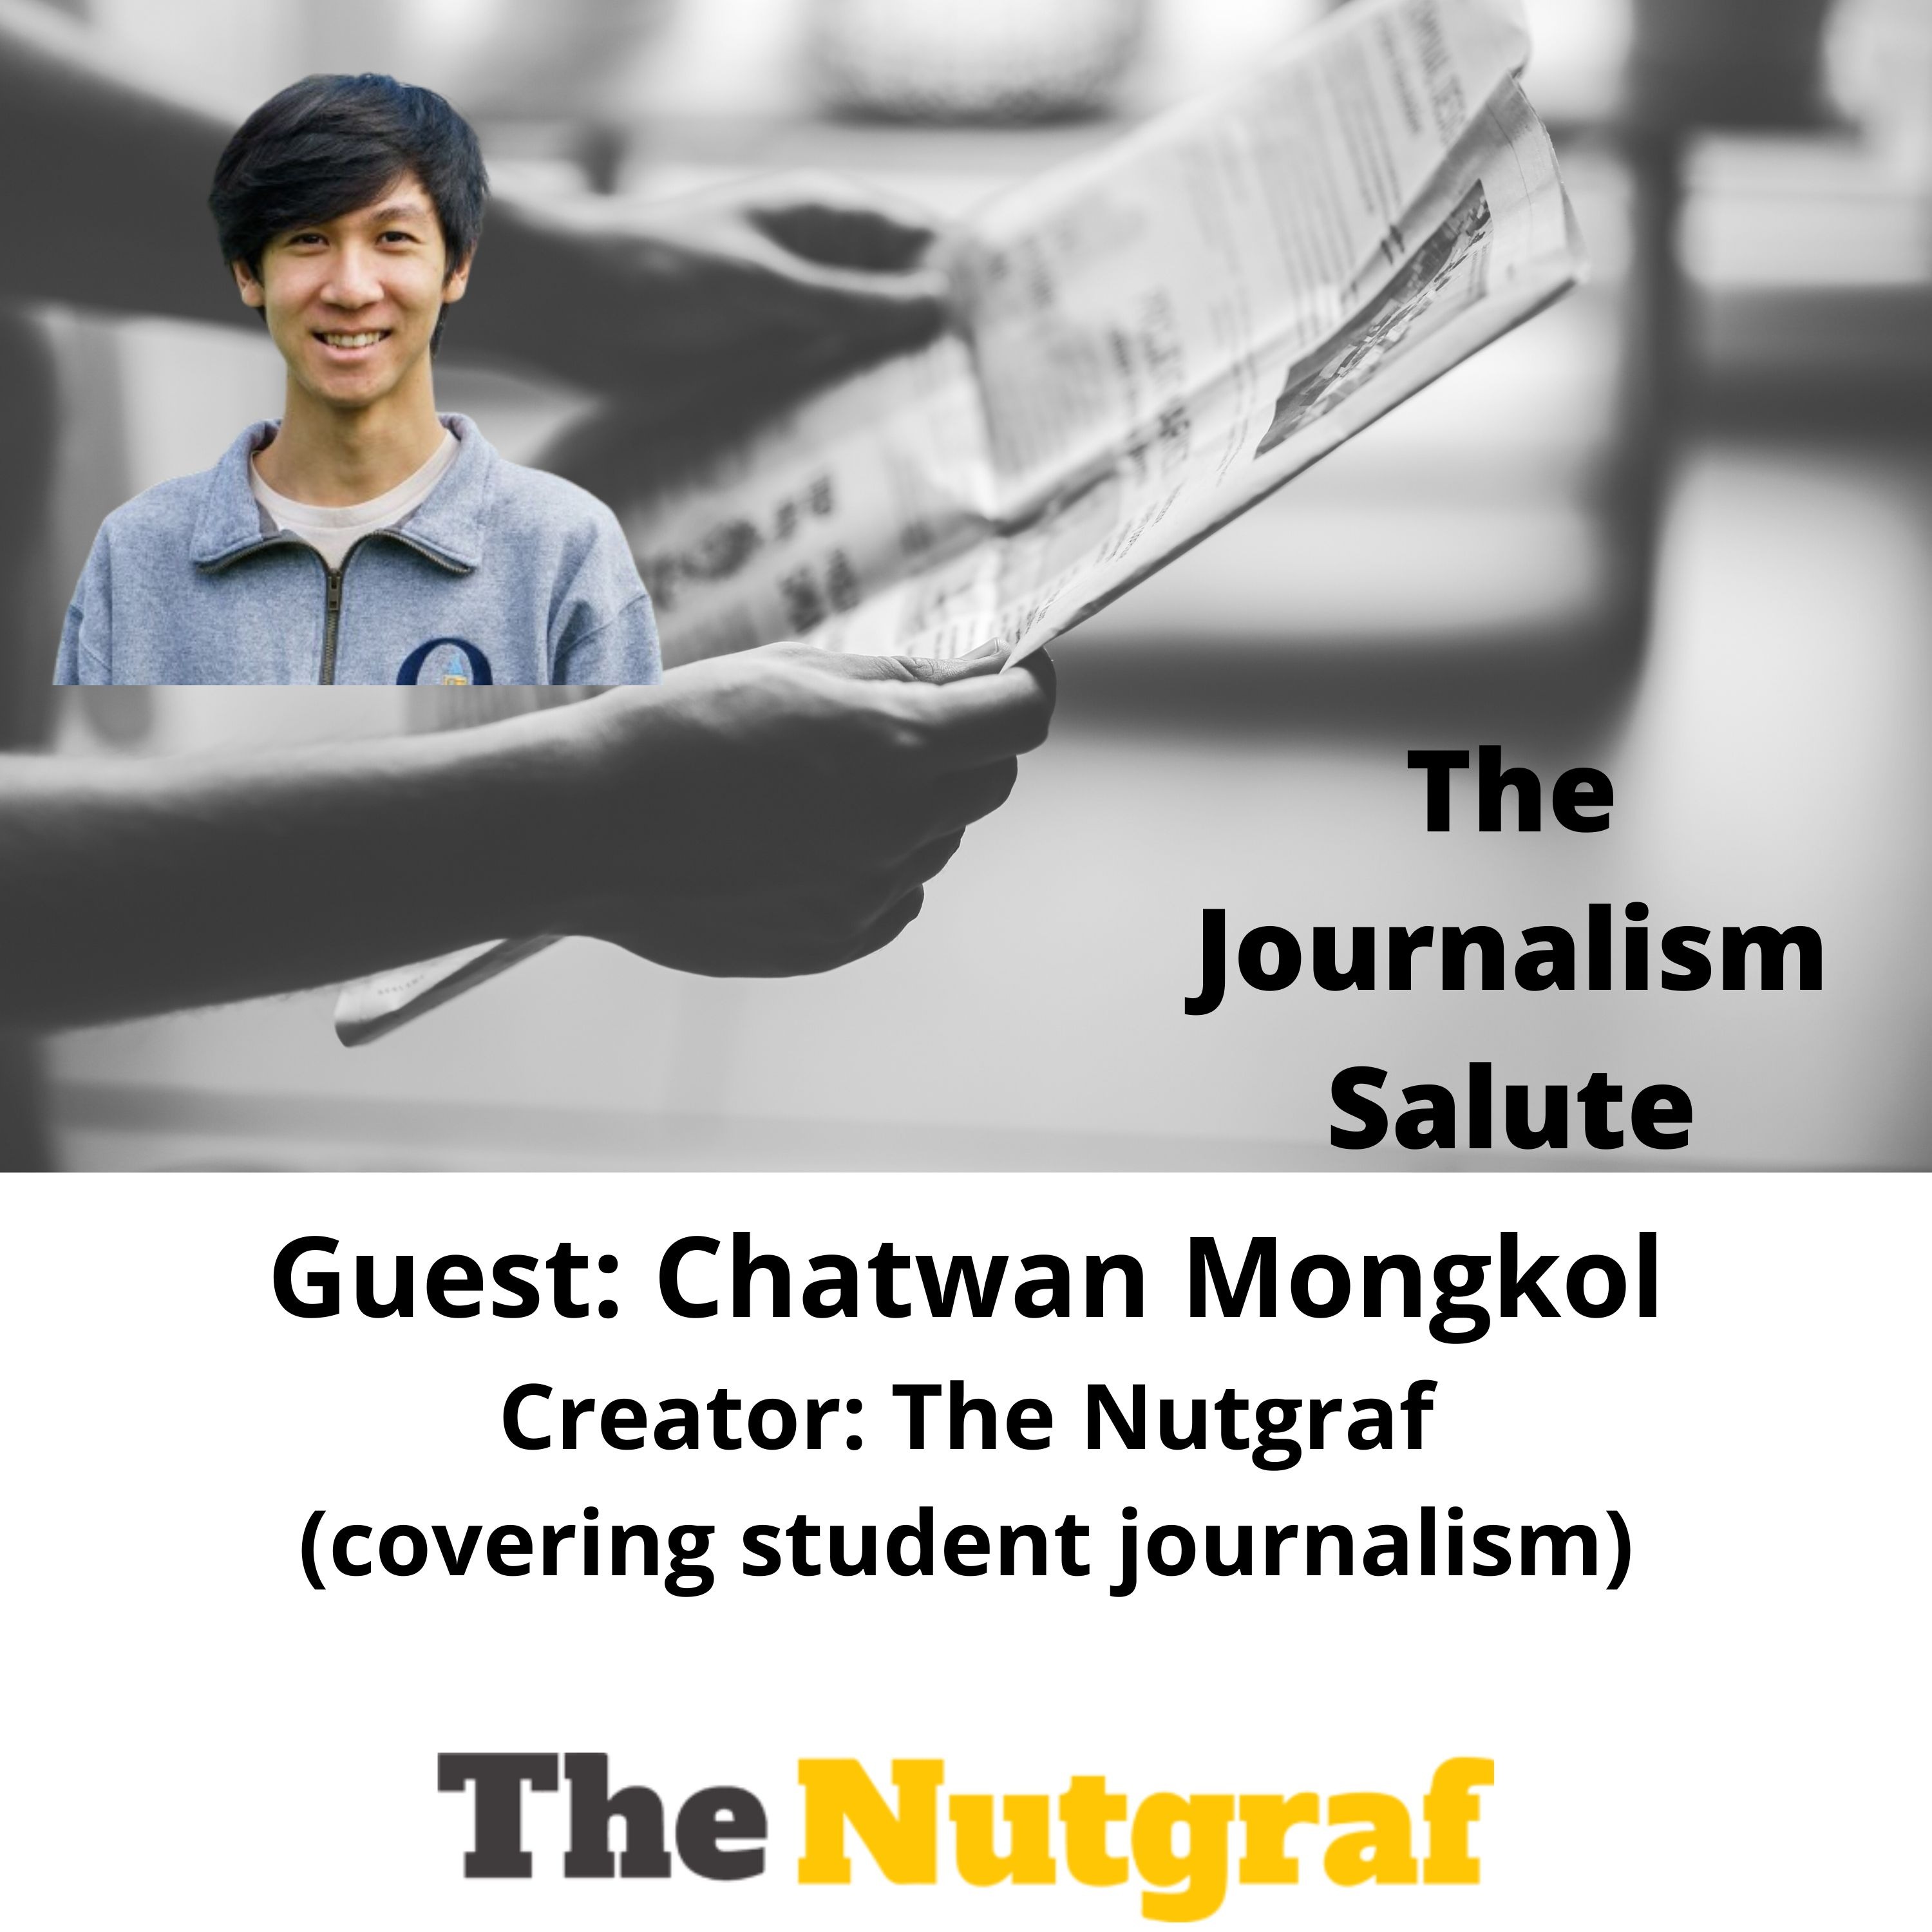 Chatwan Mongkol: Creator, The Nutgraf